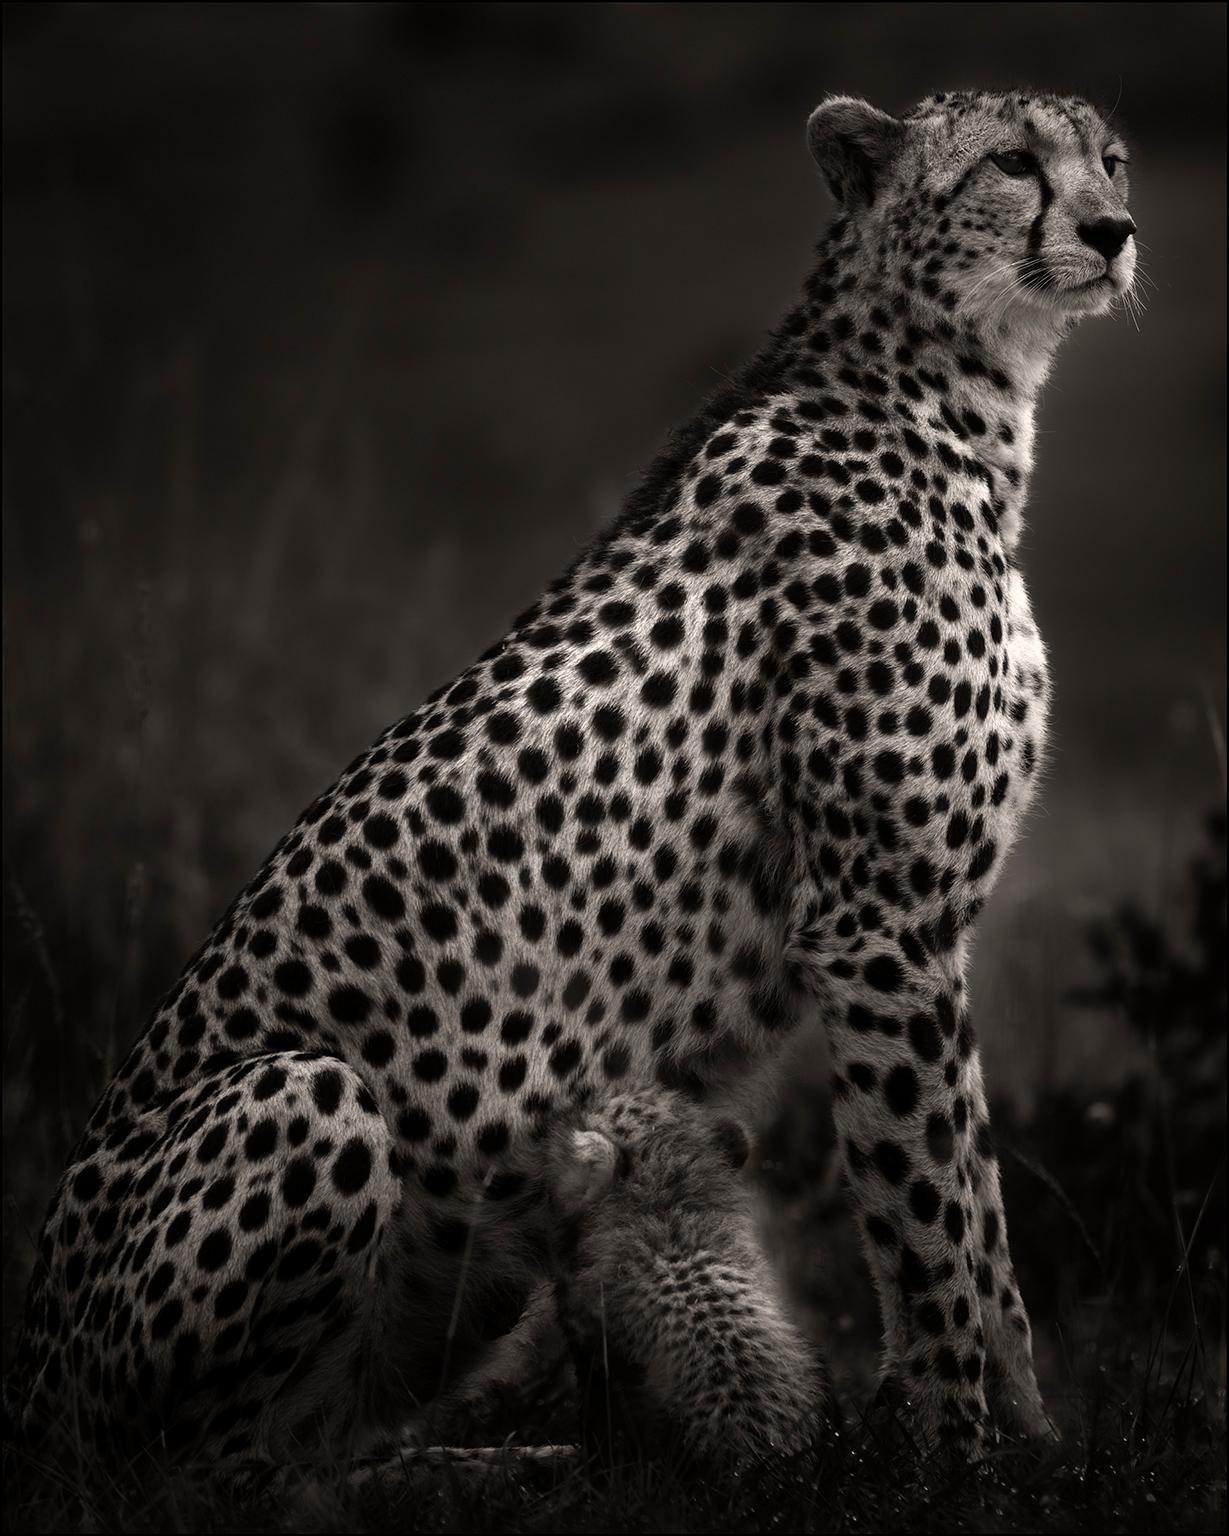 Joachim Schmeisser Portrait Photograph - Imani I, animal, black and white photography, cheetah, Africa, wildlife